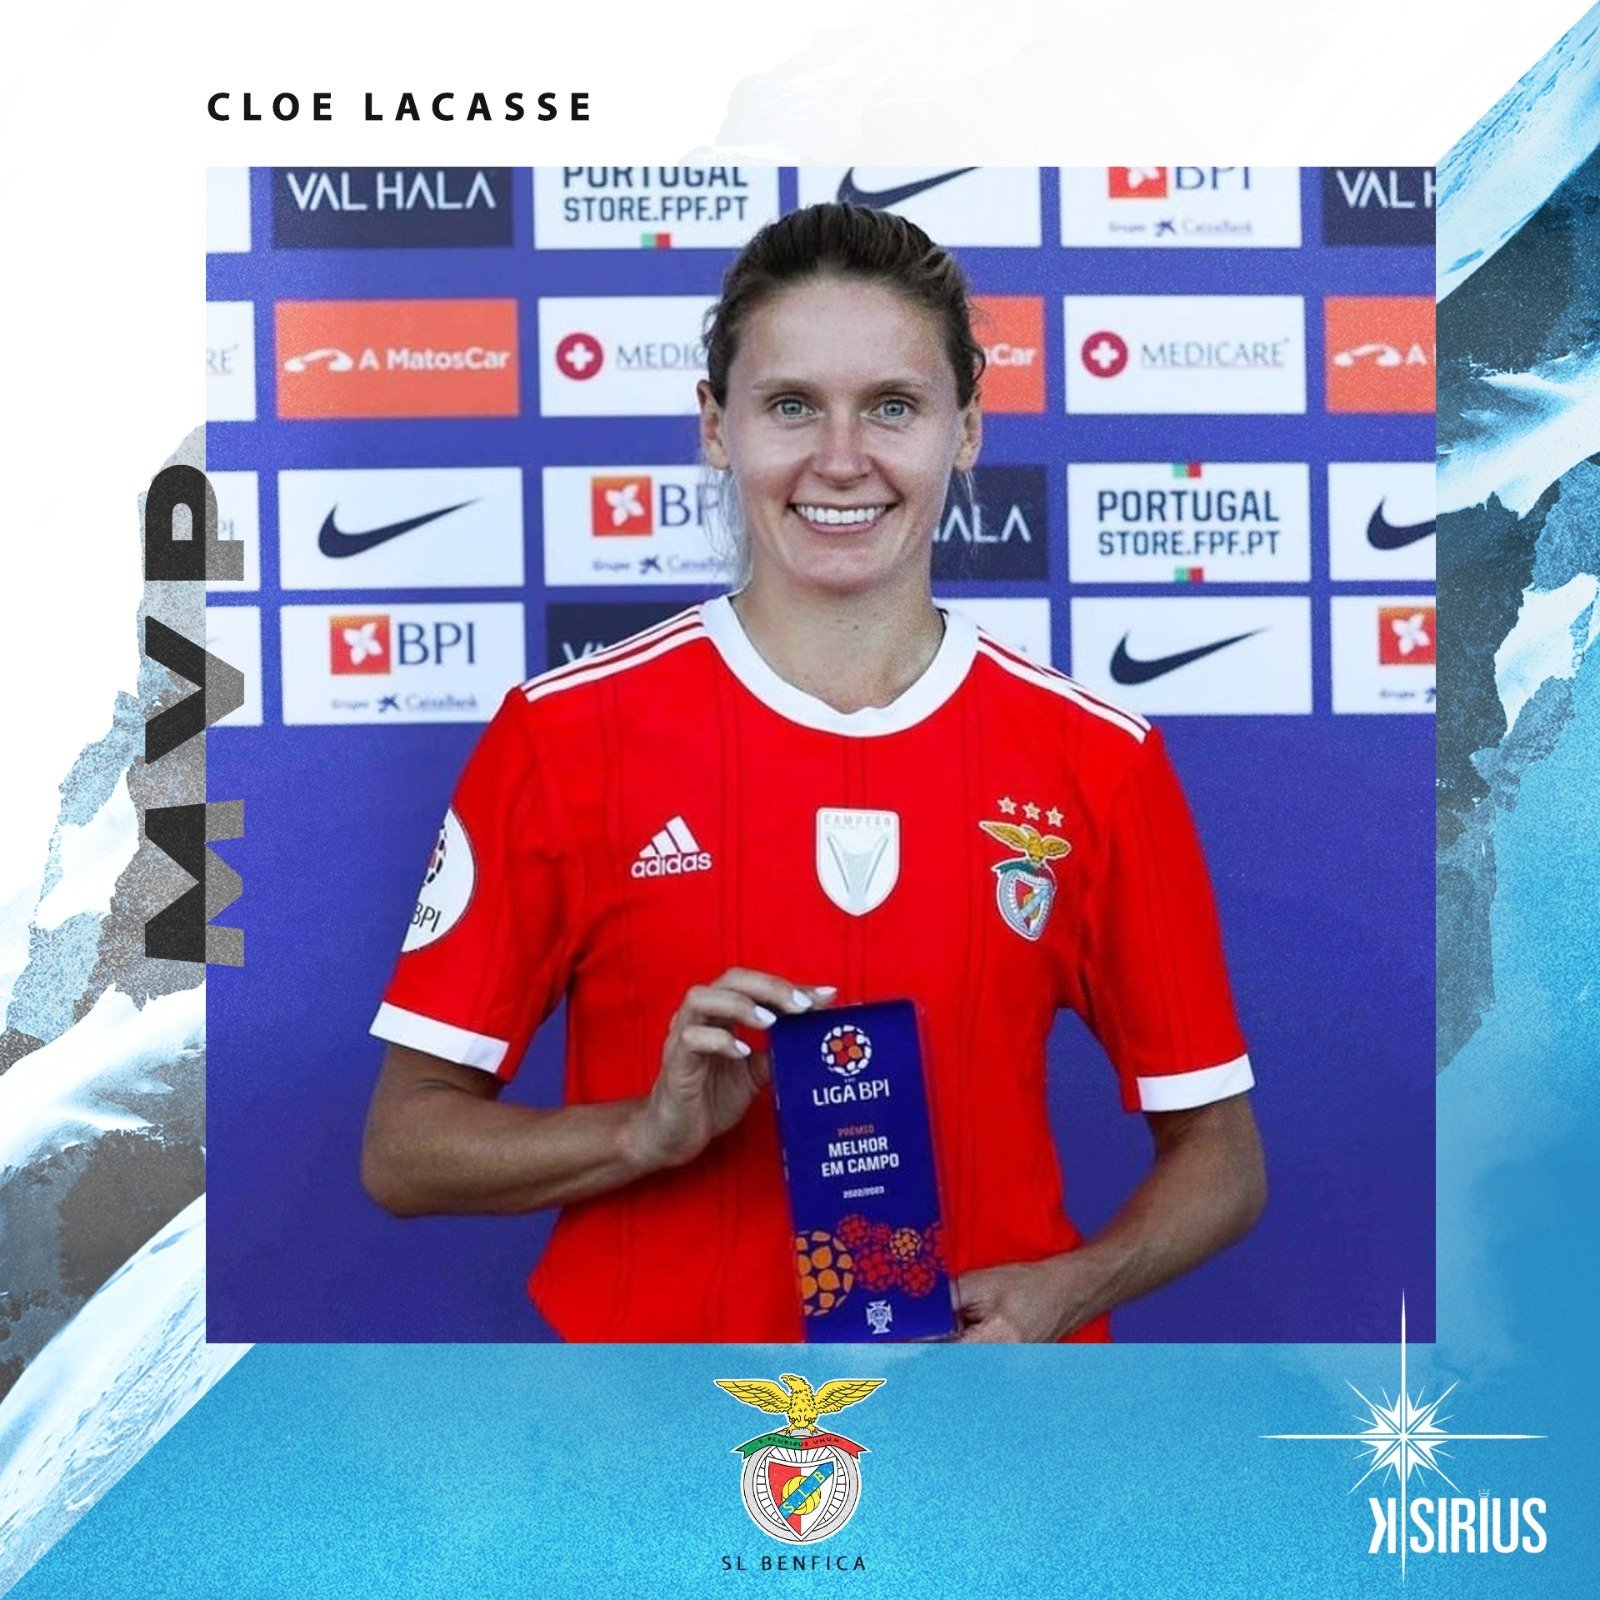 MVP: Cloe Lacasse (SL Benfica) - Cópia de